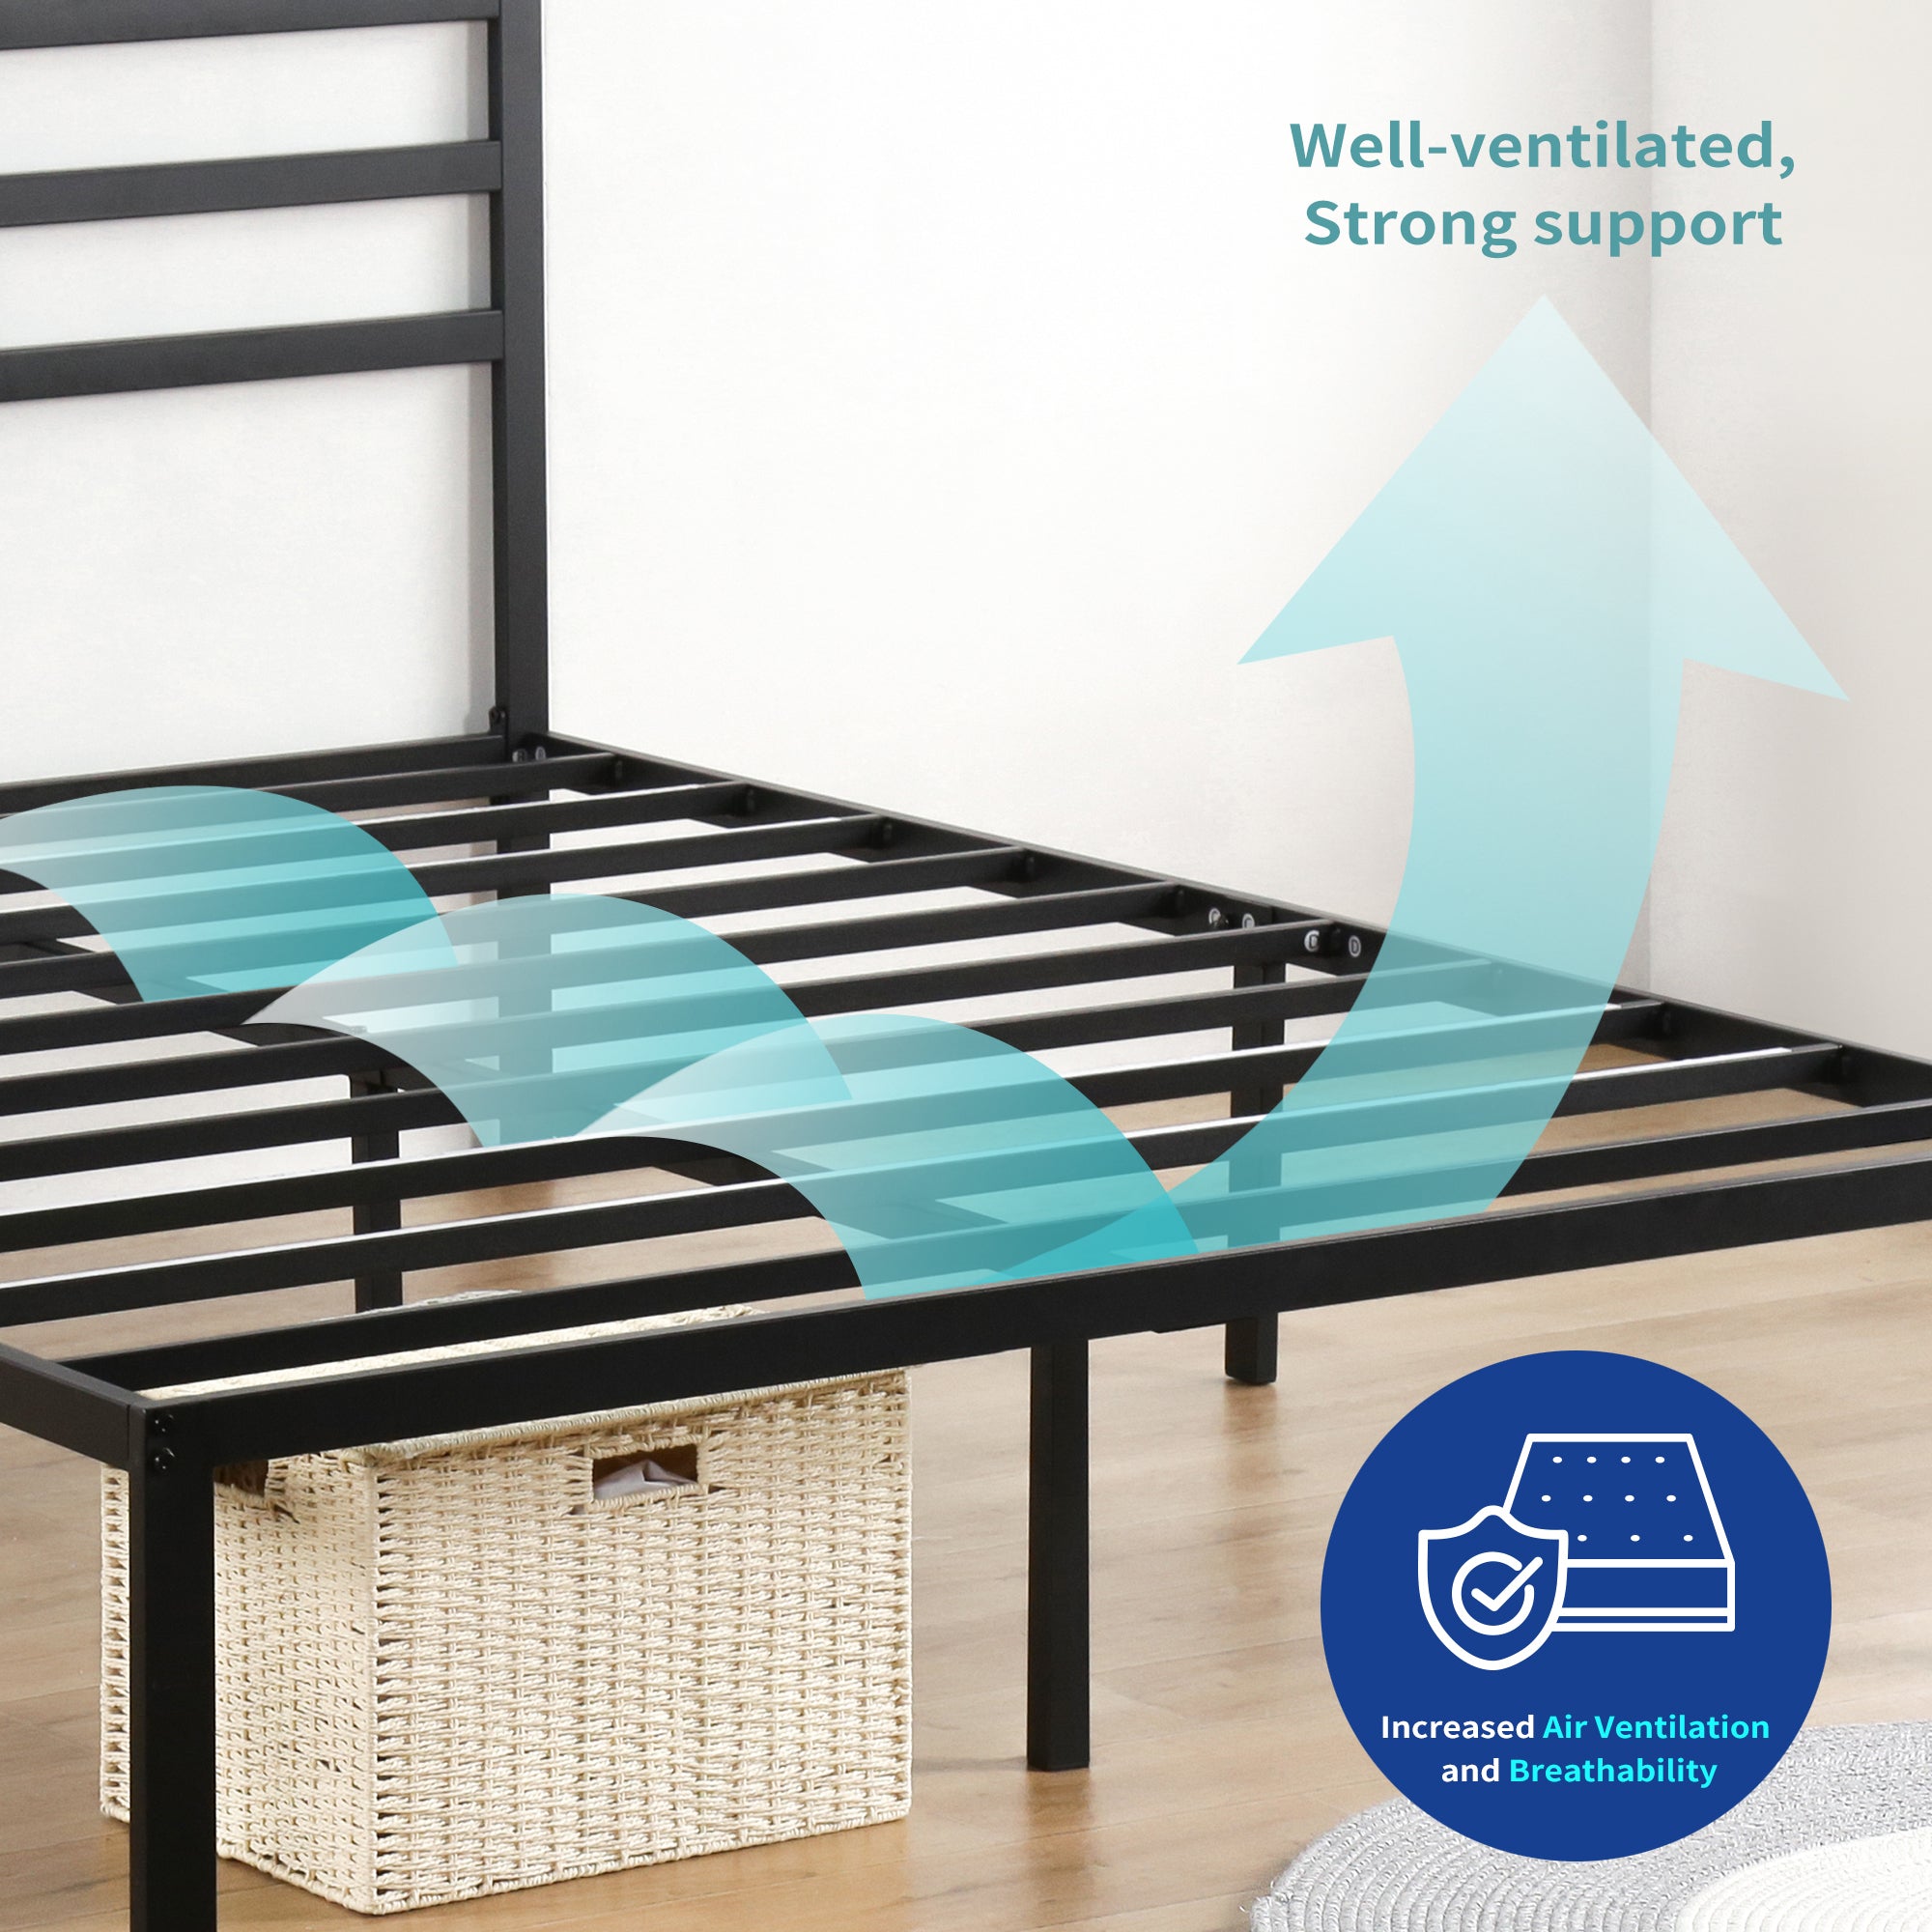 14 Inch Dura Metal Platform Bed Frame with Slat Headboard